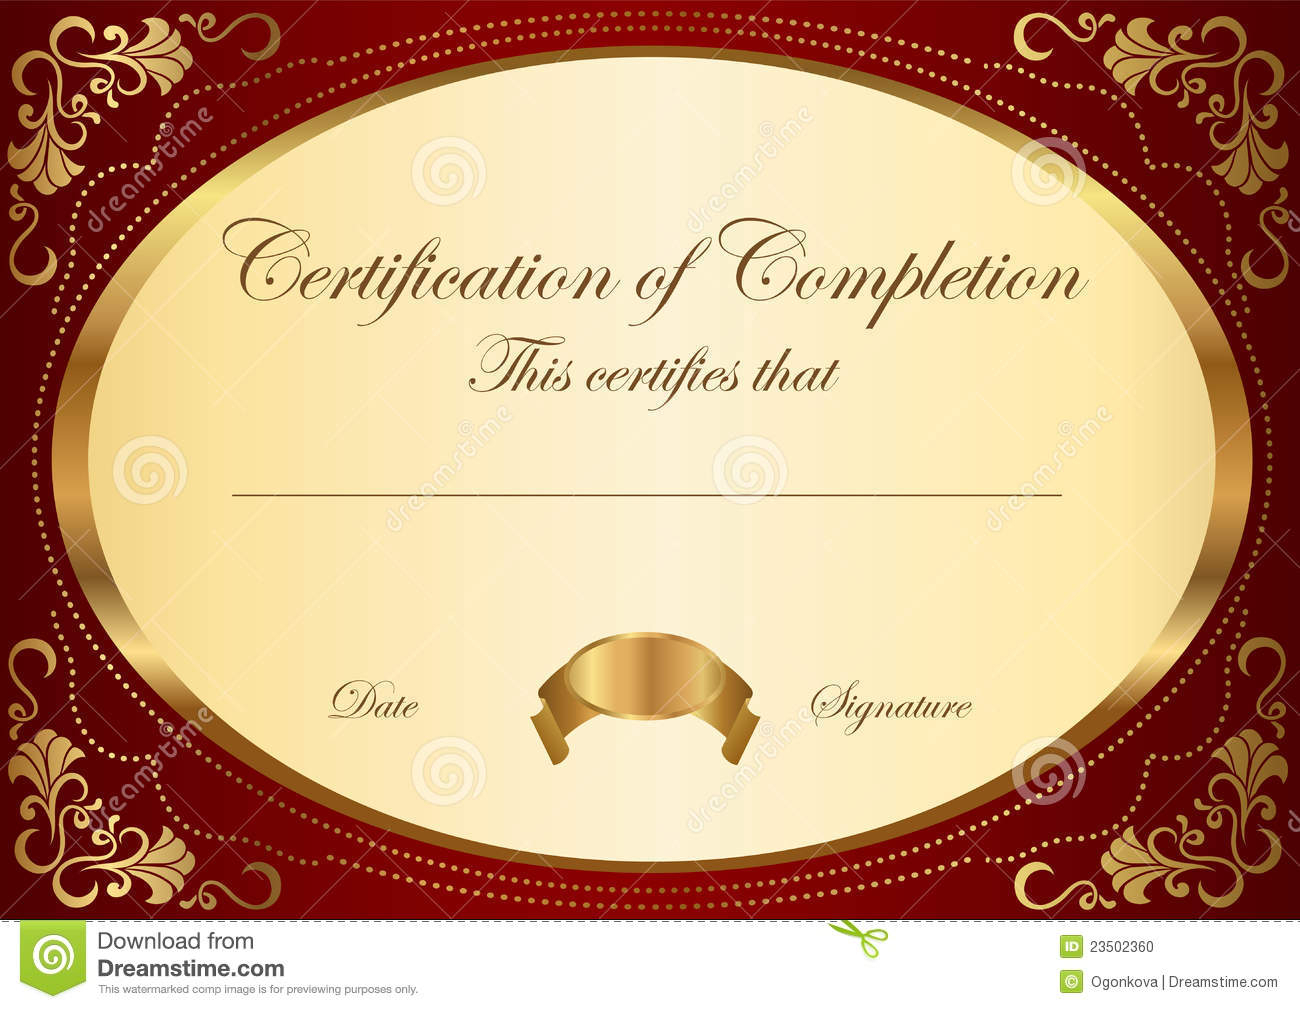 Award Certificate Design Template Halloween Templates Free In Halloween Certificate Template